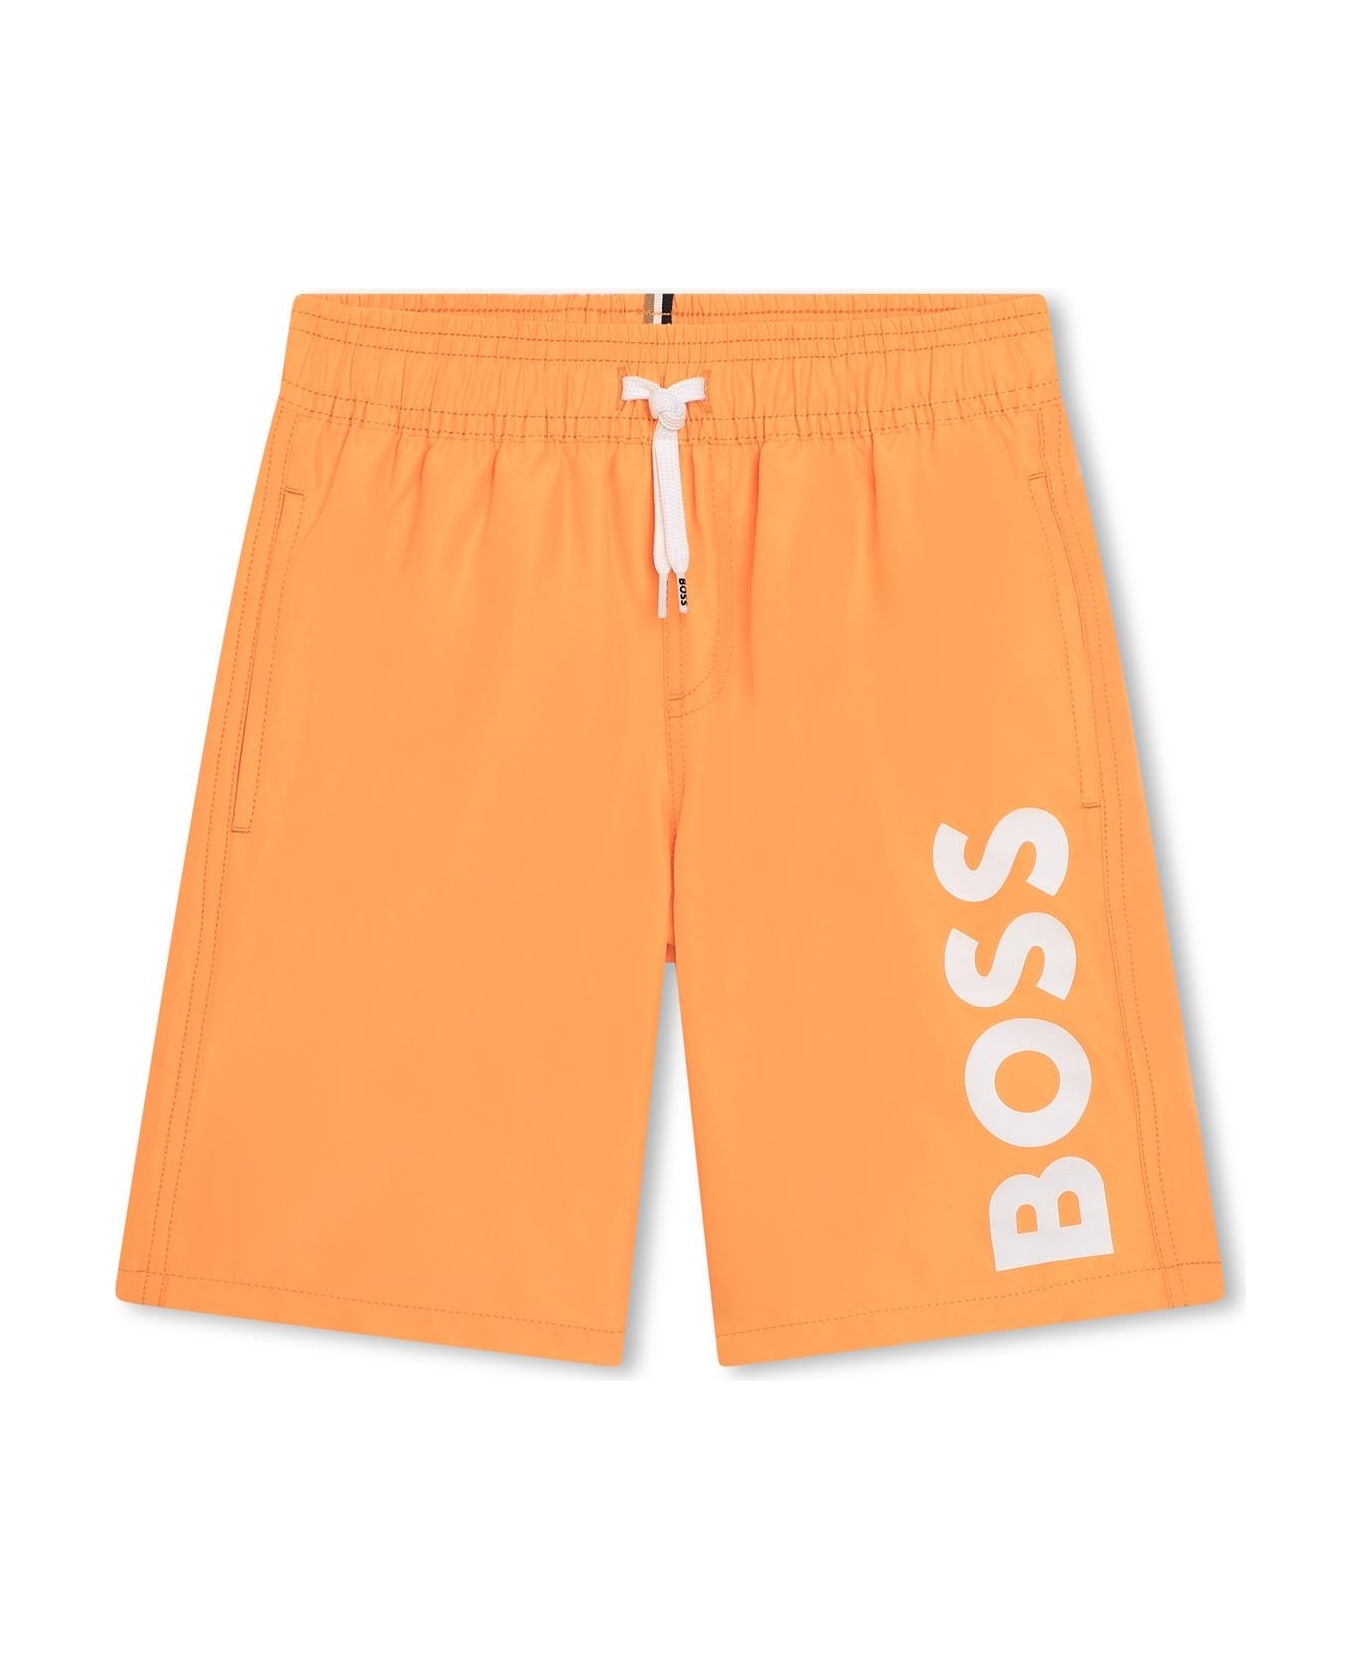 Hugo Boss Swimsuit With Drawstring - Orange